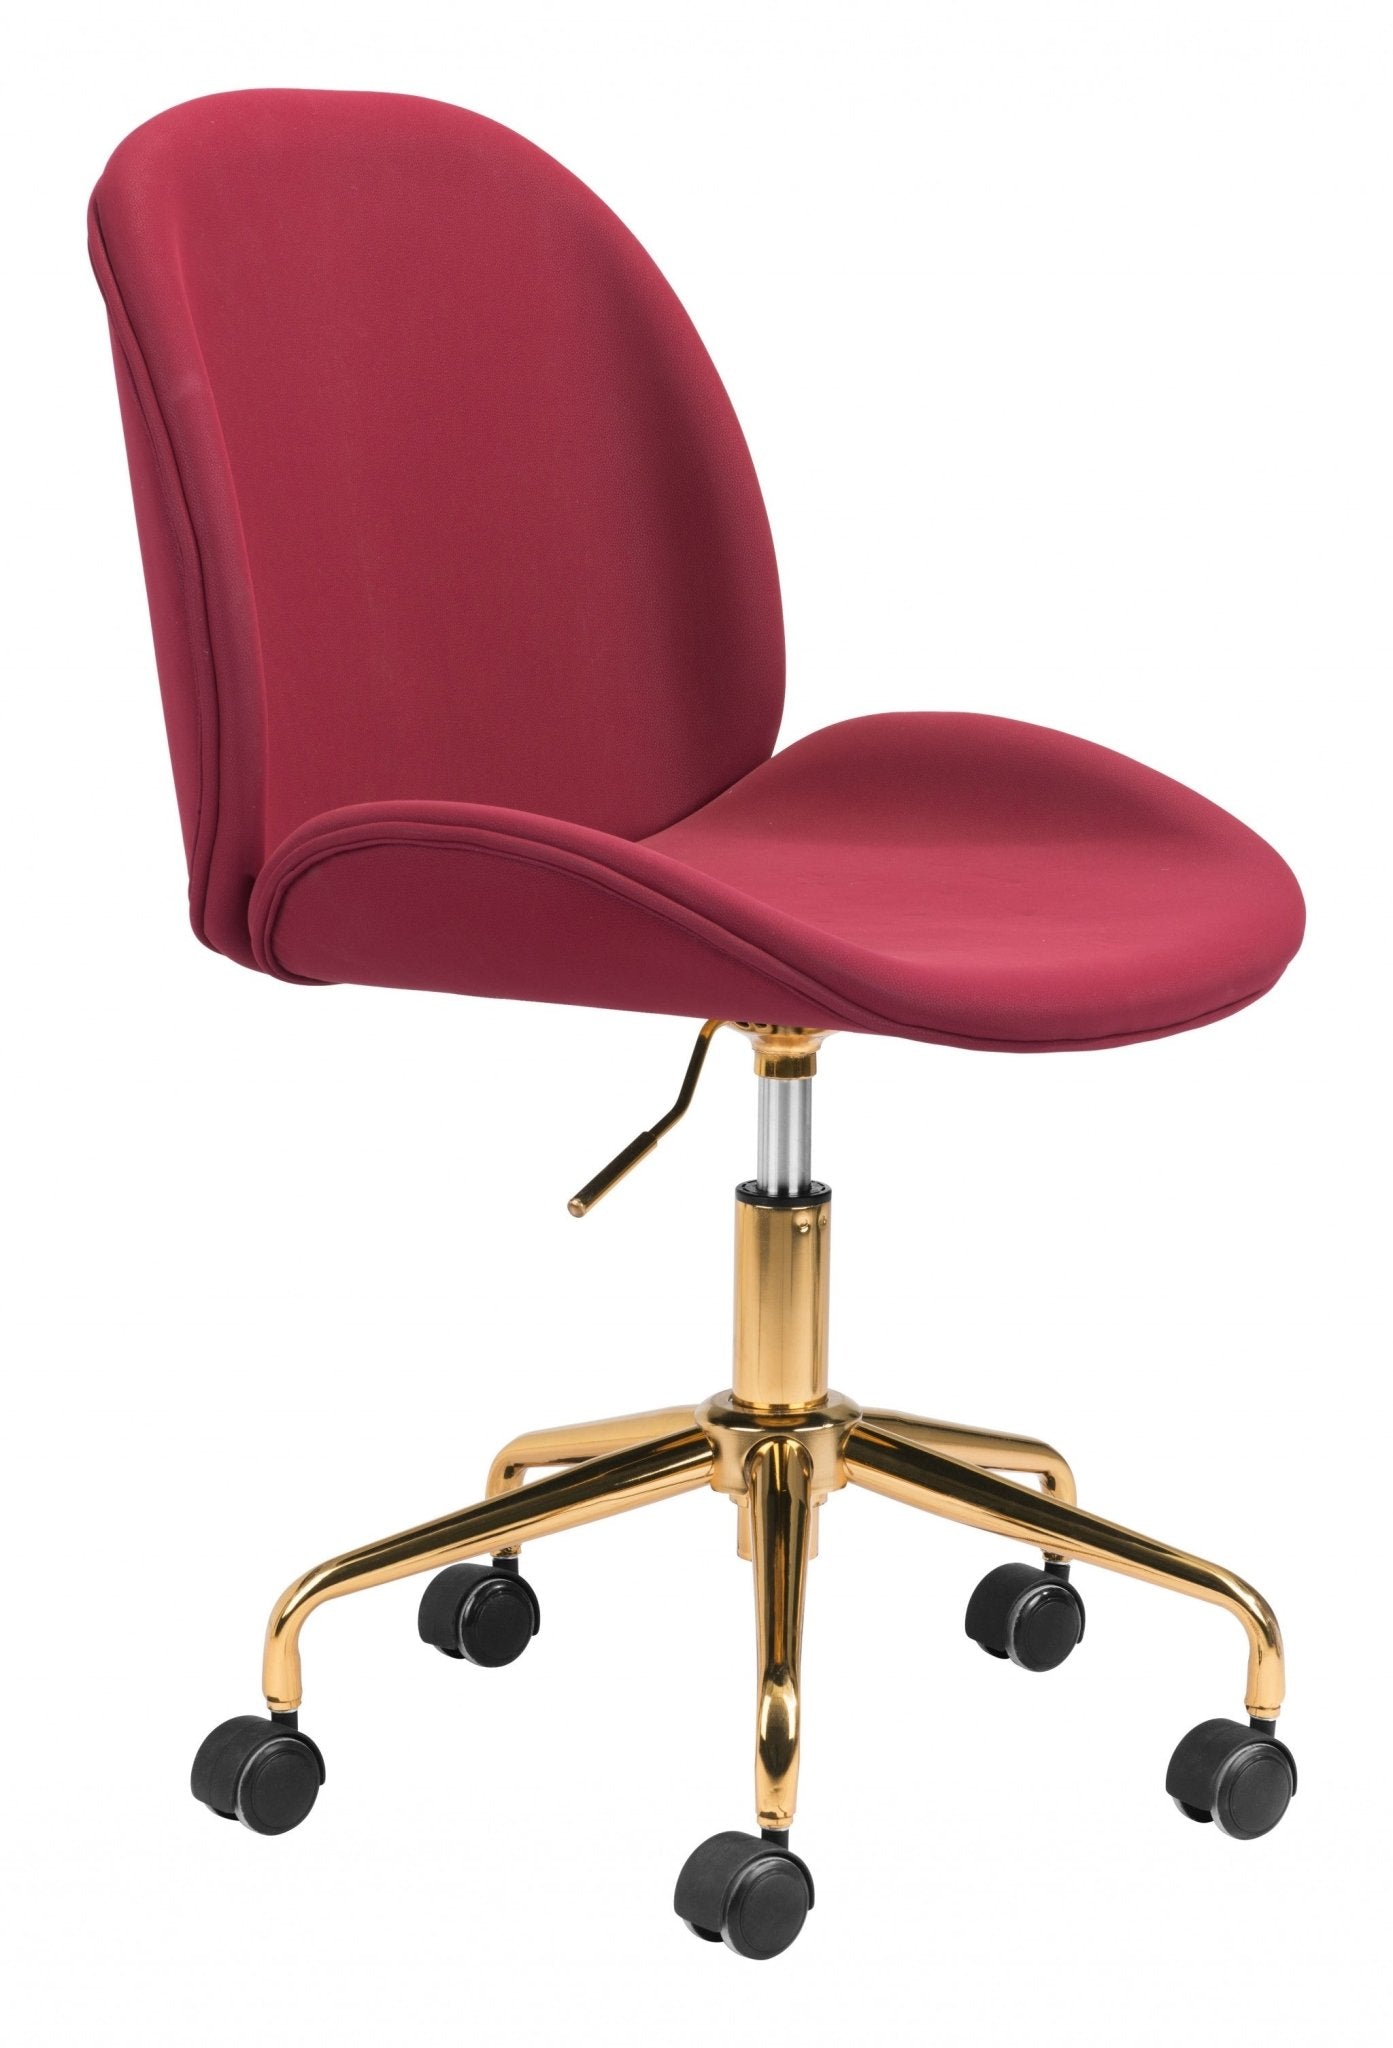 Red-Velvet-Seat-Swivel-Adjustable-Task-Chair-Metal-Back-Steel-Frame-Office-Chairs